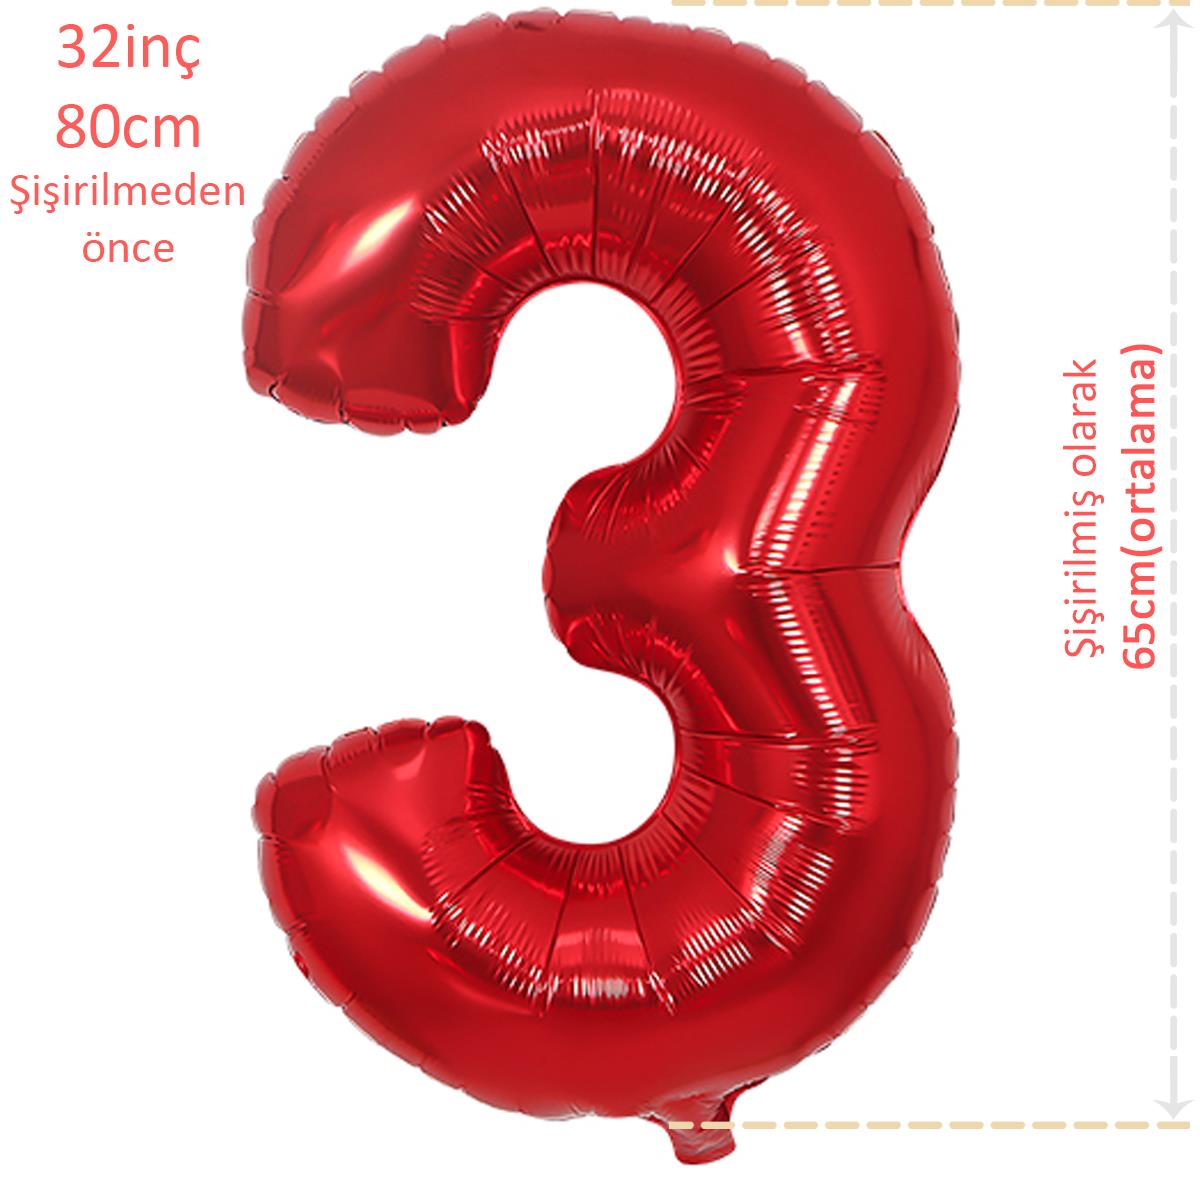 Rakam Folyo Balon Kırmızı 3 Rakamı 32inç 80cm